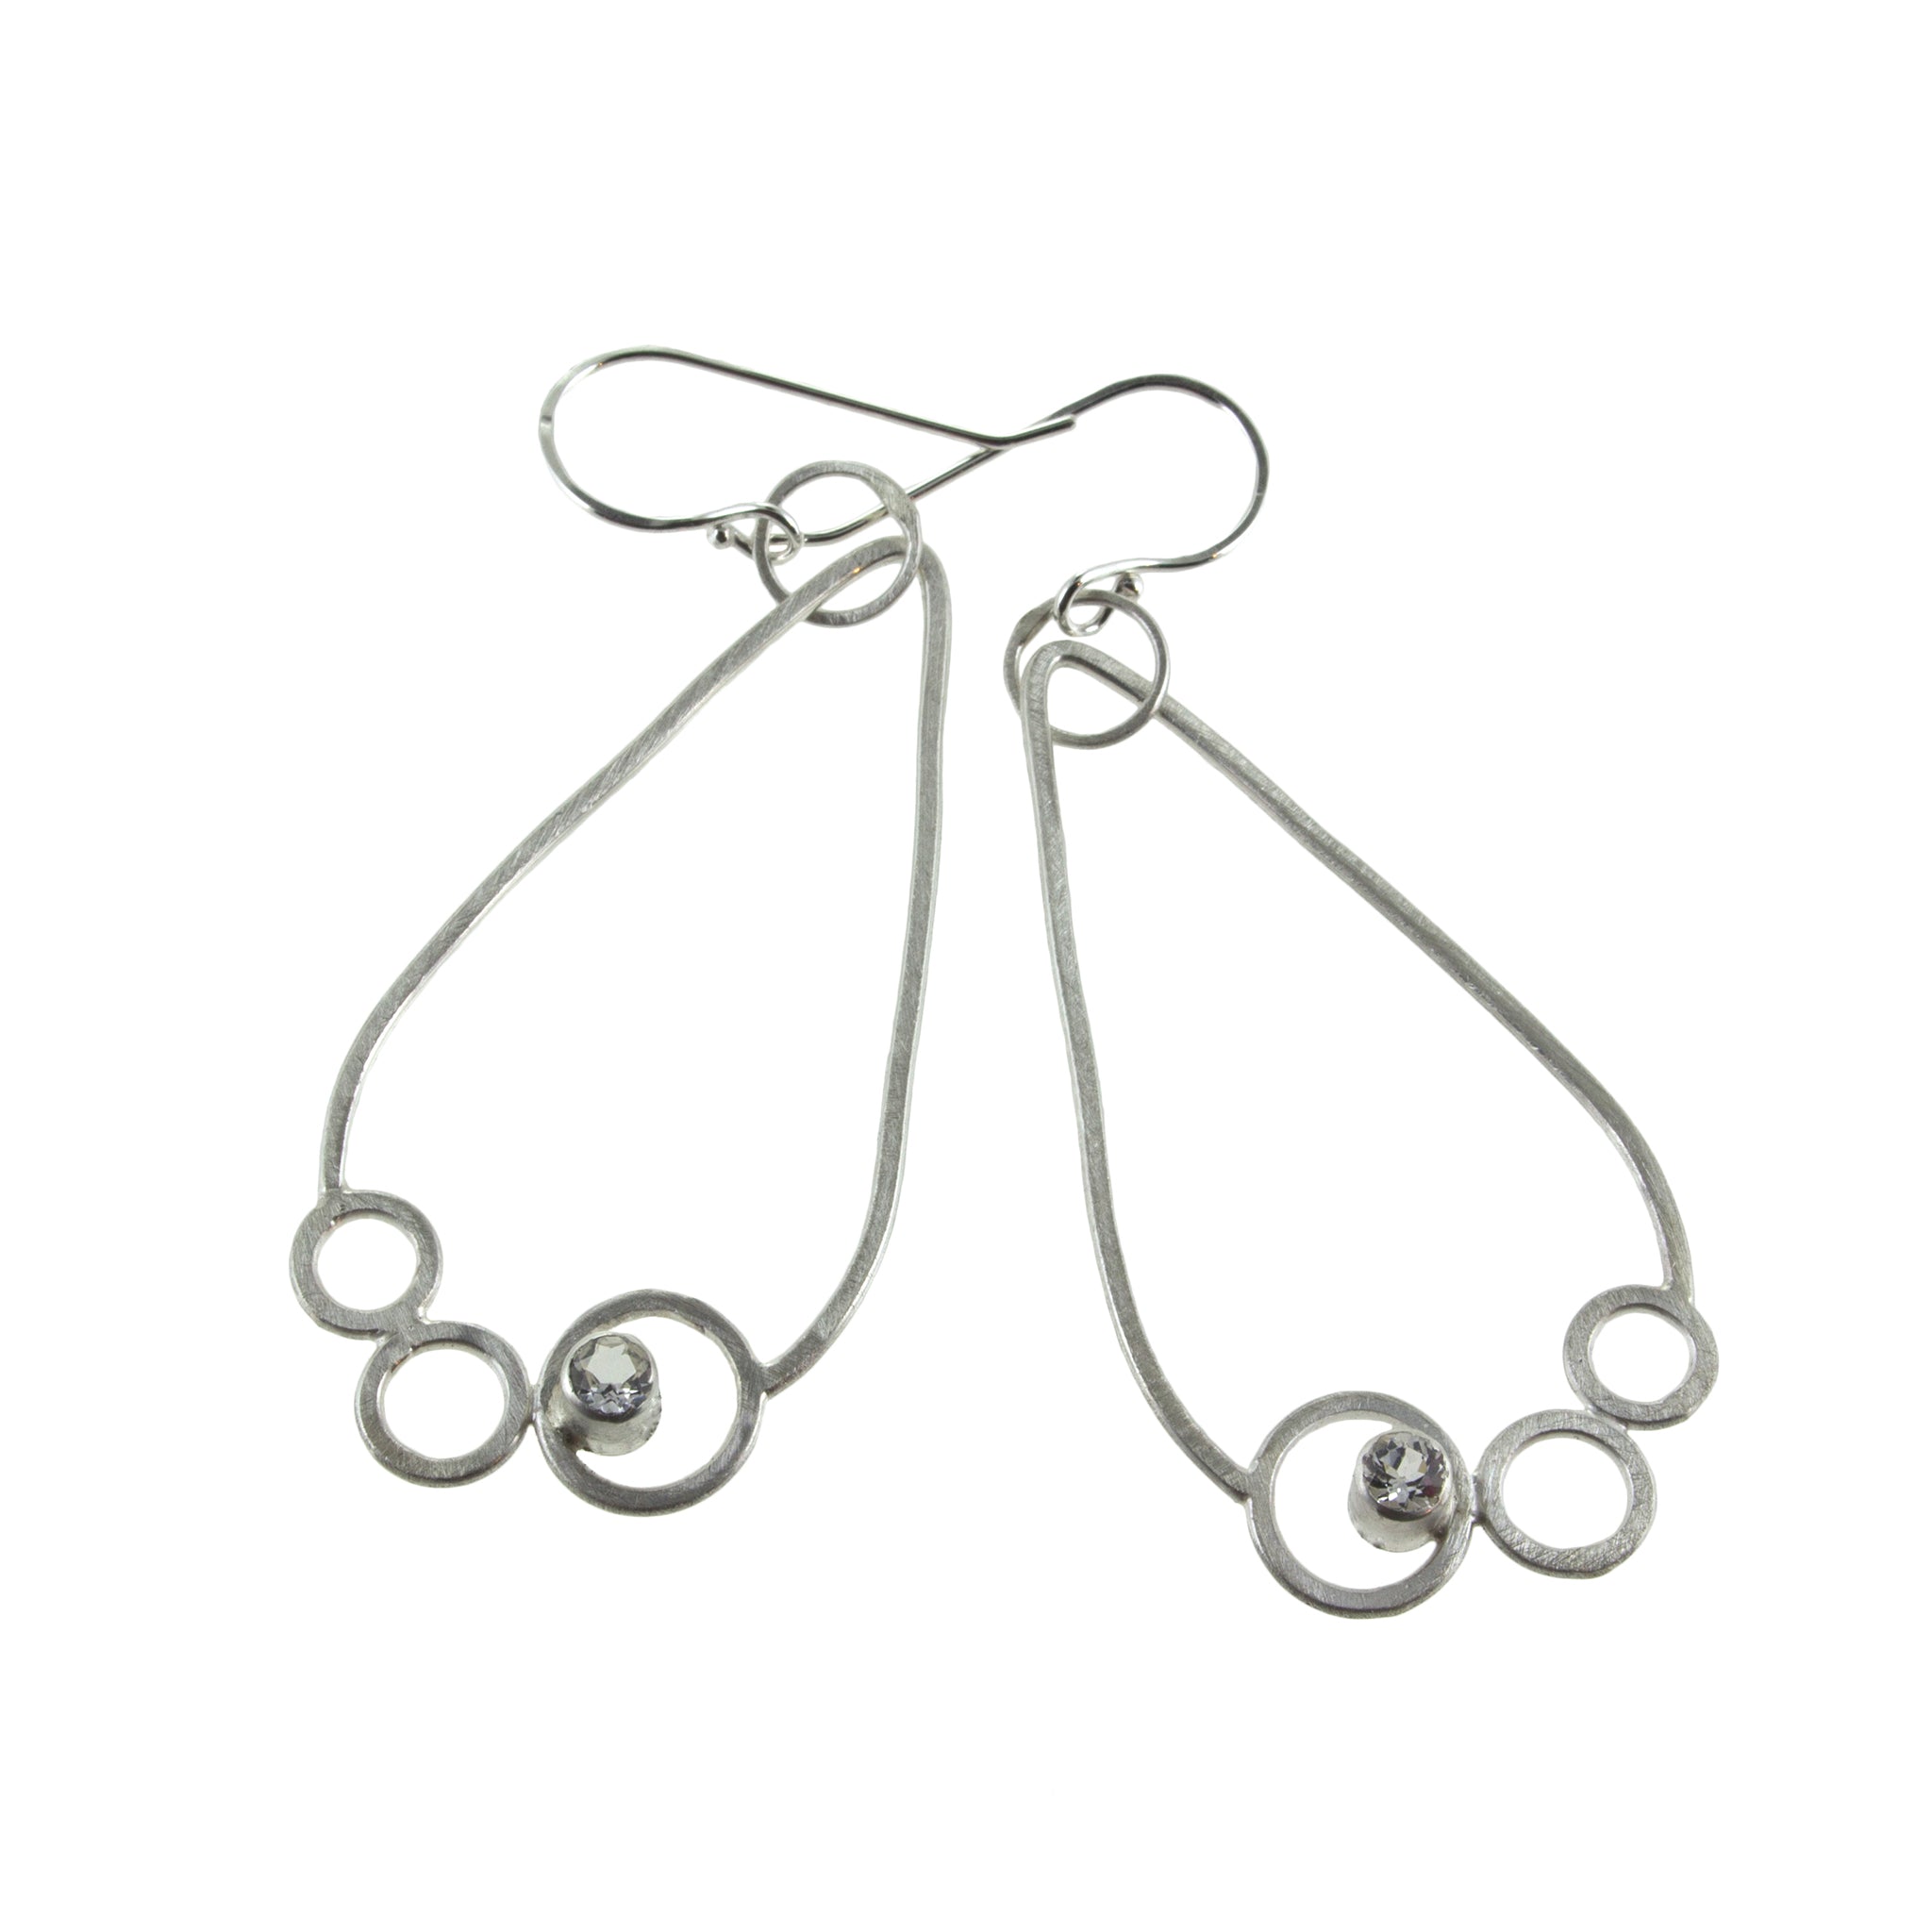 large sterling silver teardrop earrings with gemstones by eko jewelry design, Lenore